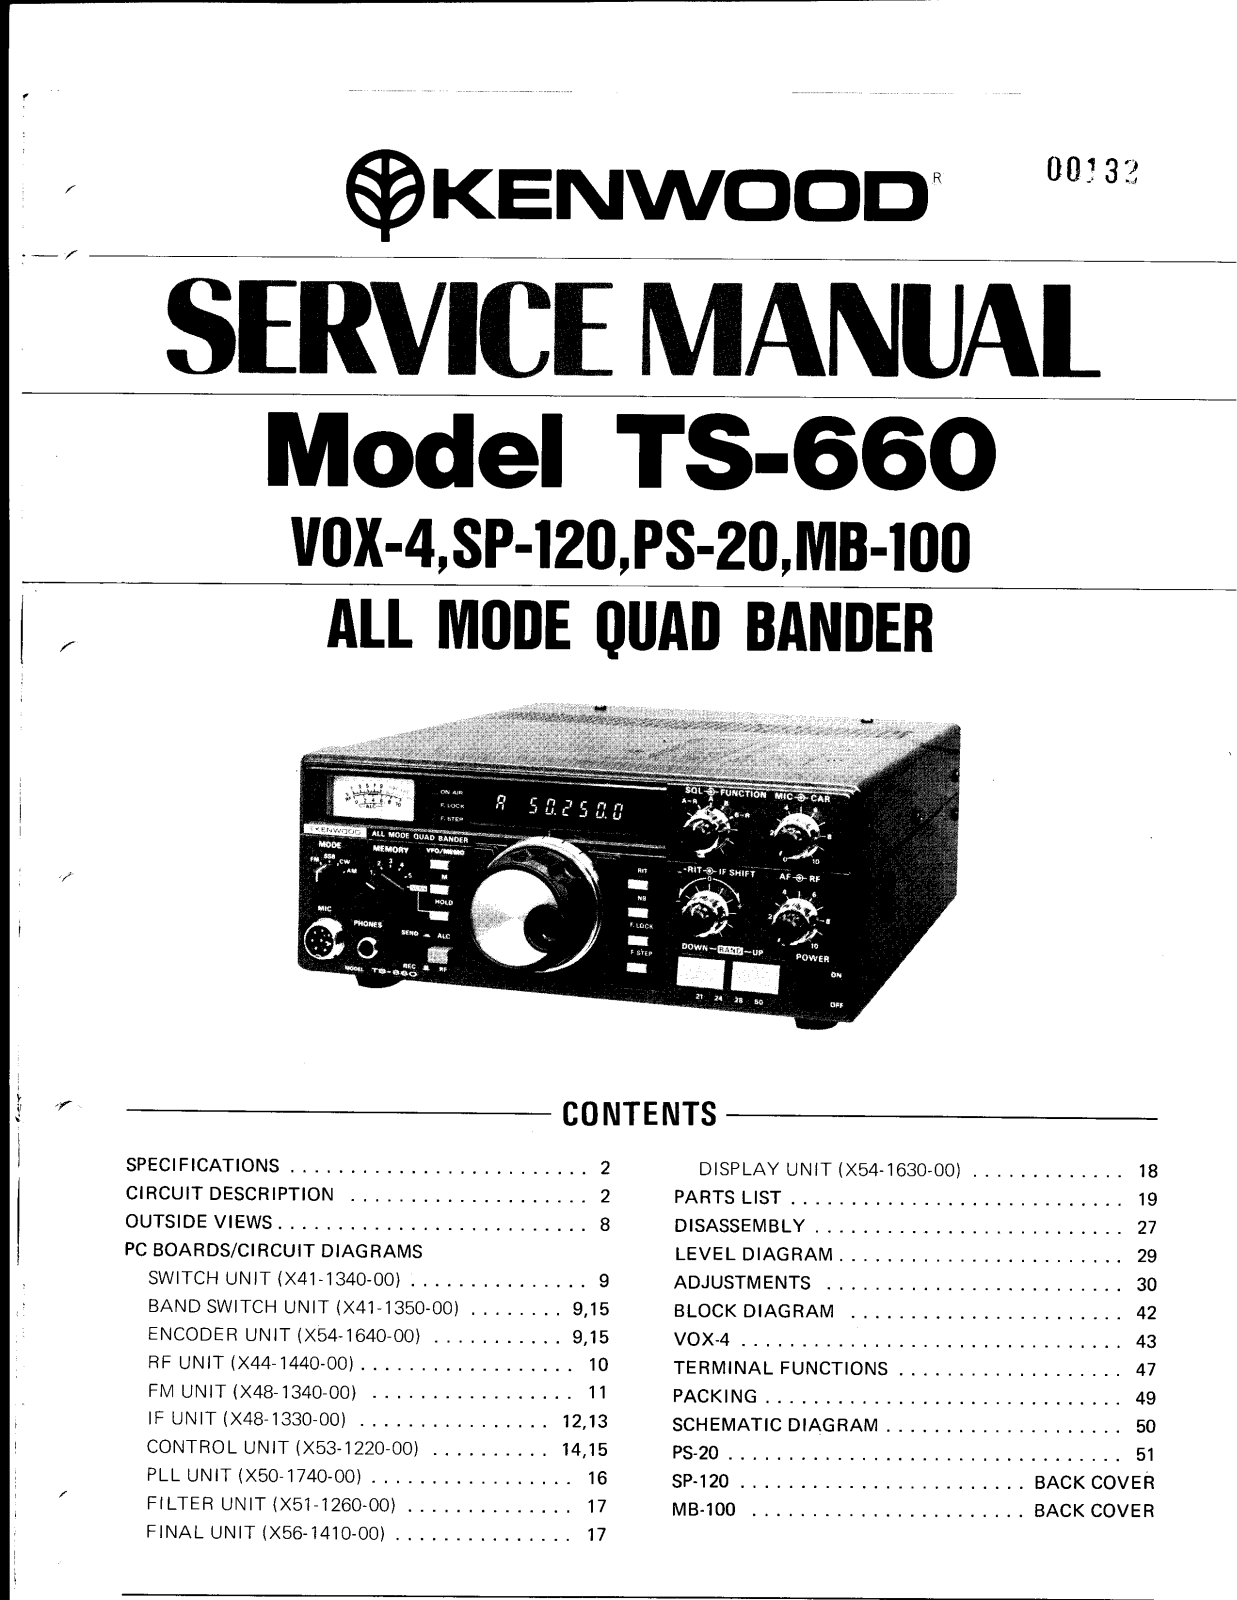 Kenwood TS-660 Service Manual